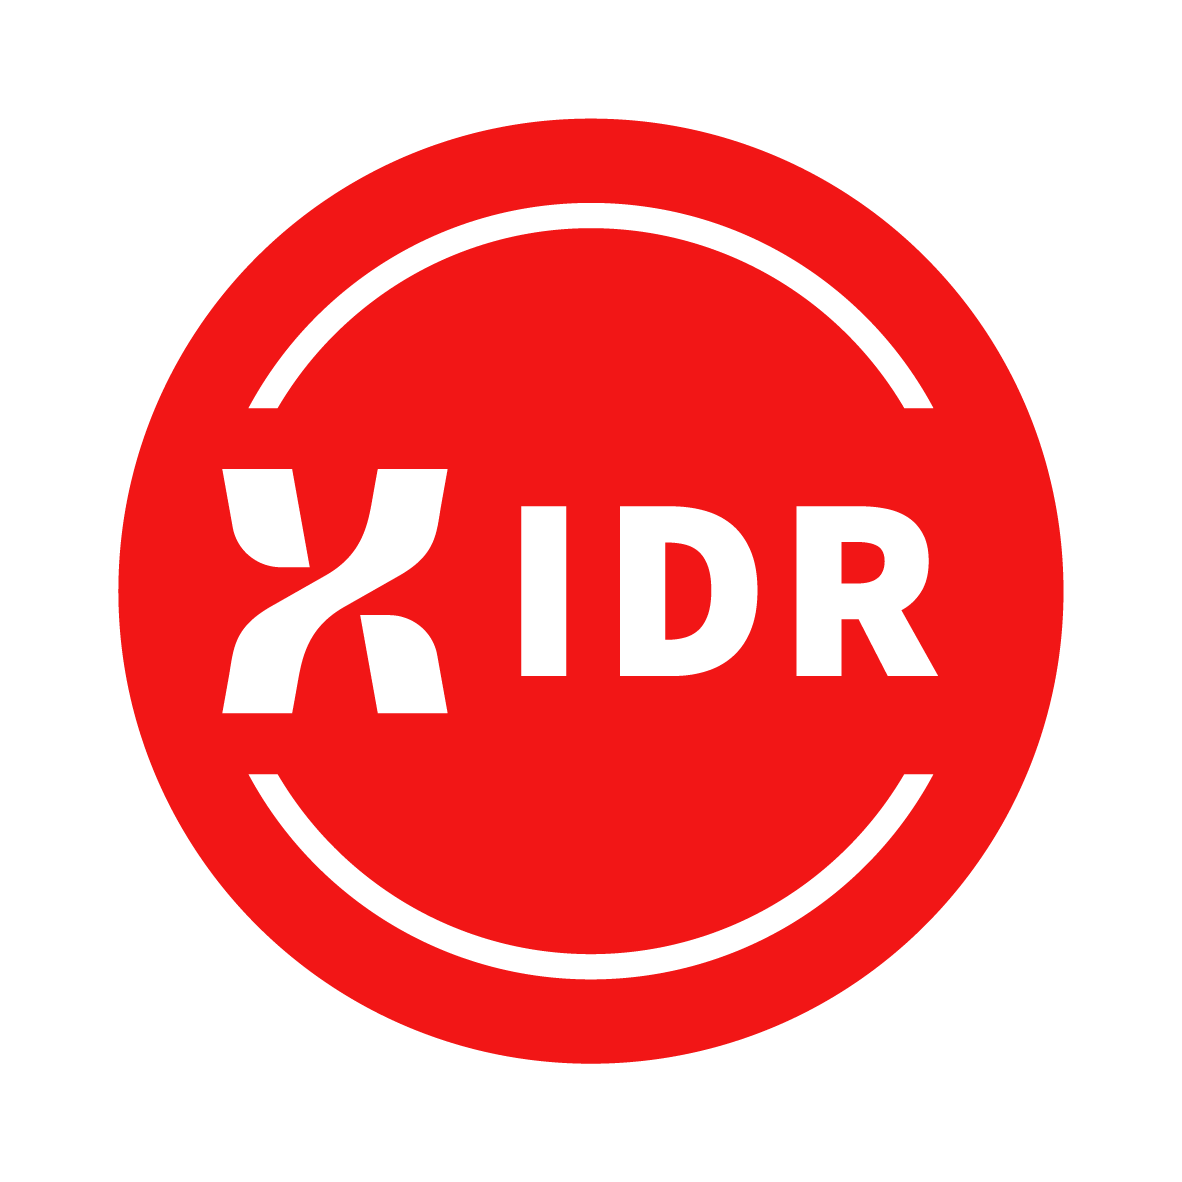 XIDR XIDR icon symbol